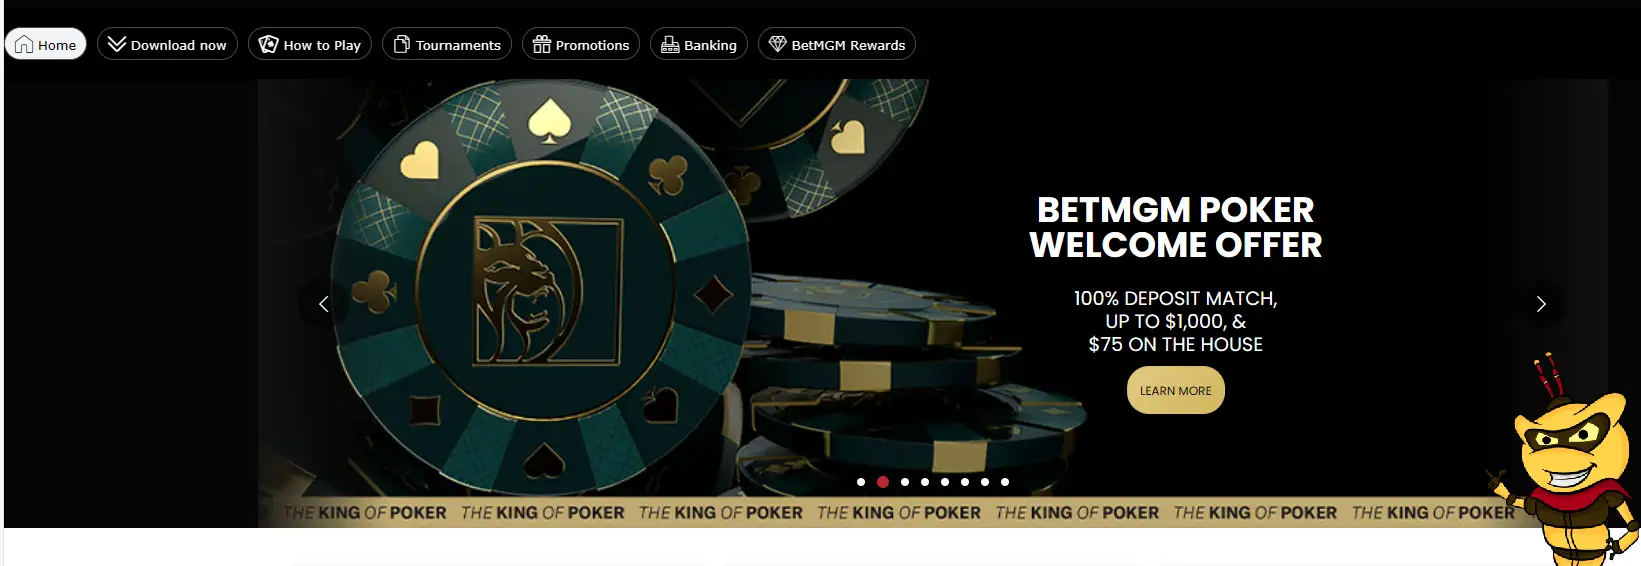 BetMGM Casino Bonus Offers 